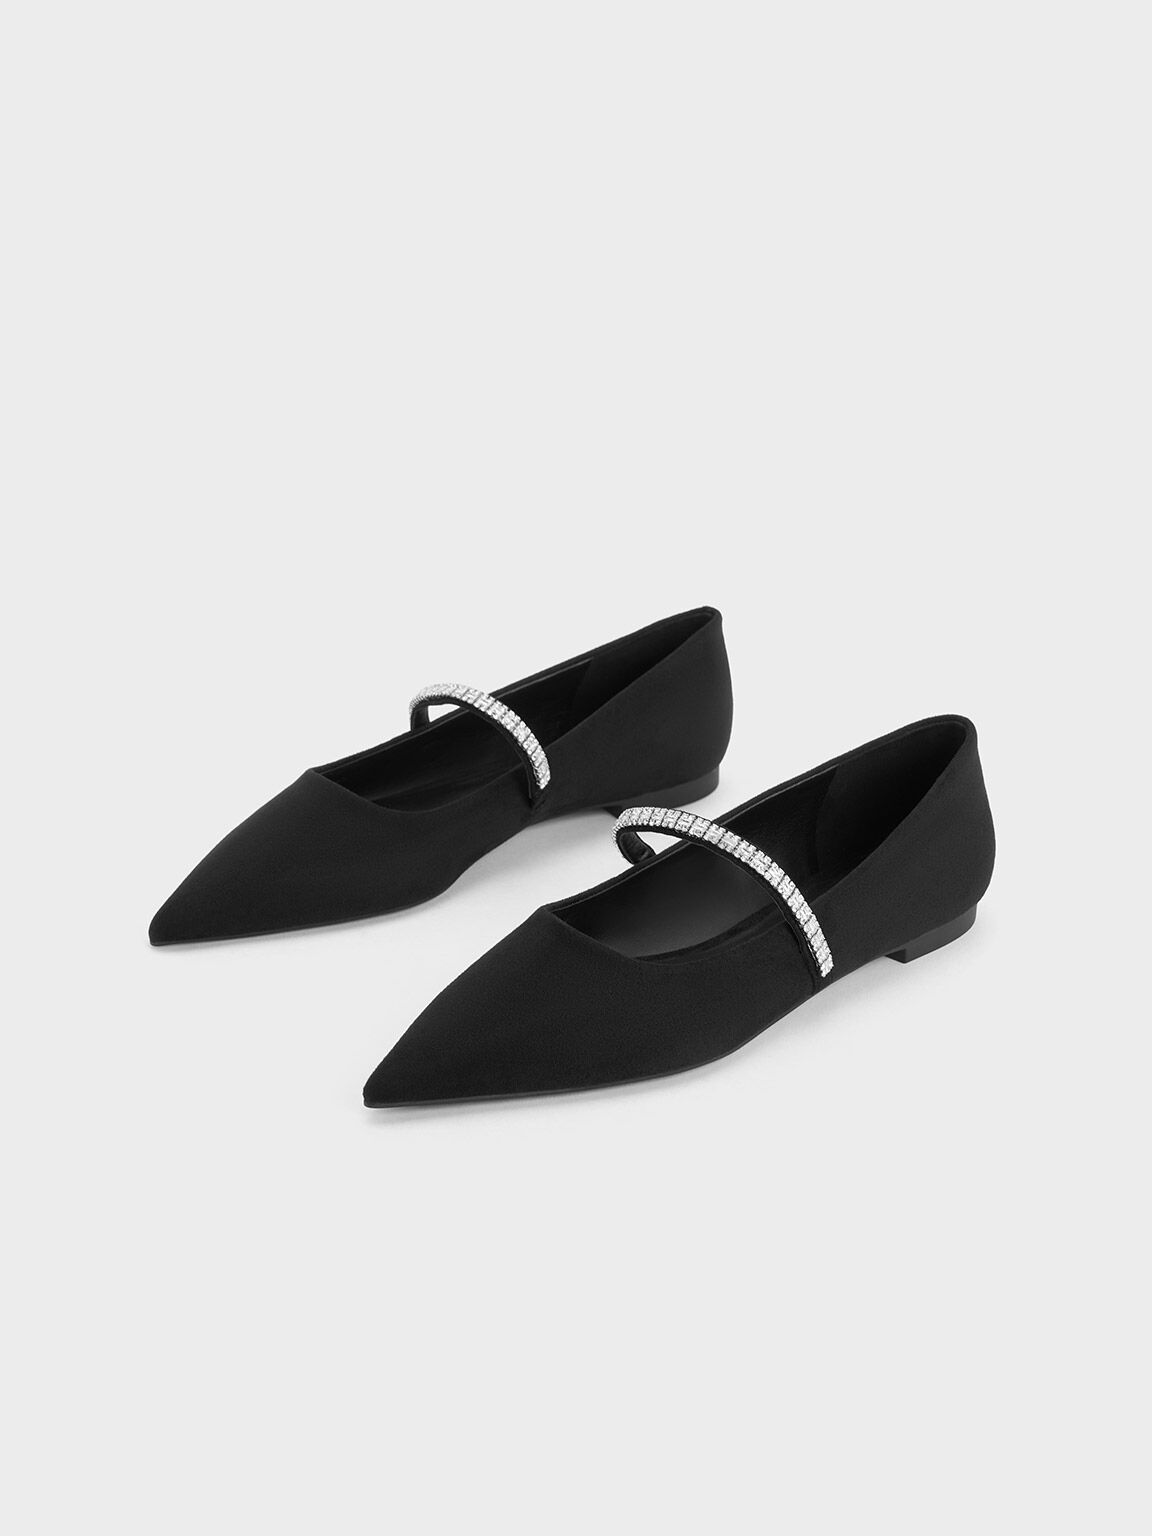 Dusto Women's Tan Faux Suede Pointed Toe Block Heels Mary Jane Shoes Sz  36/6